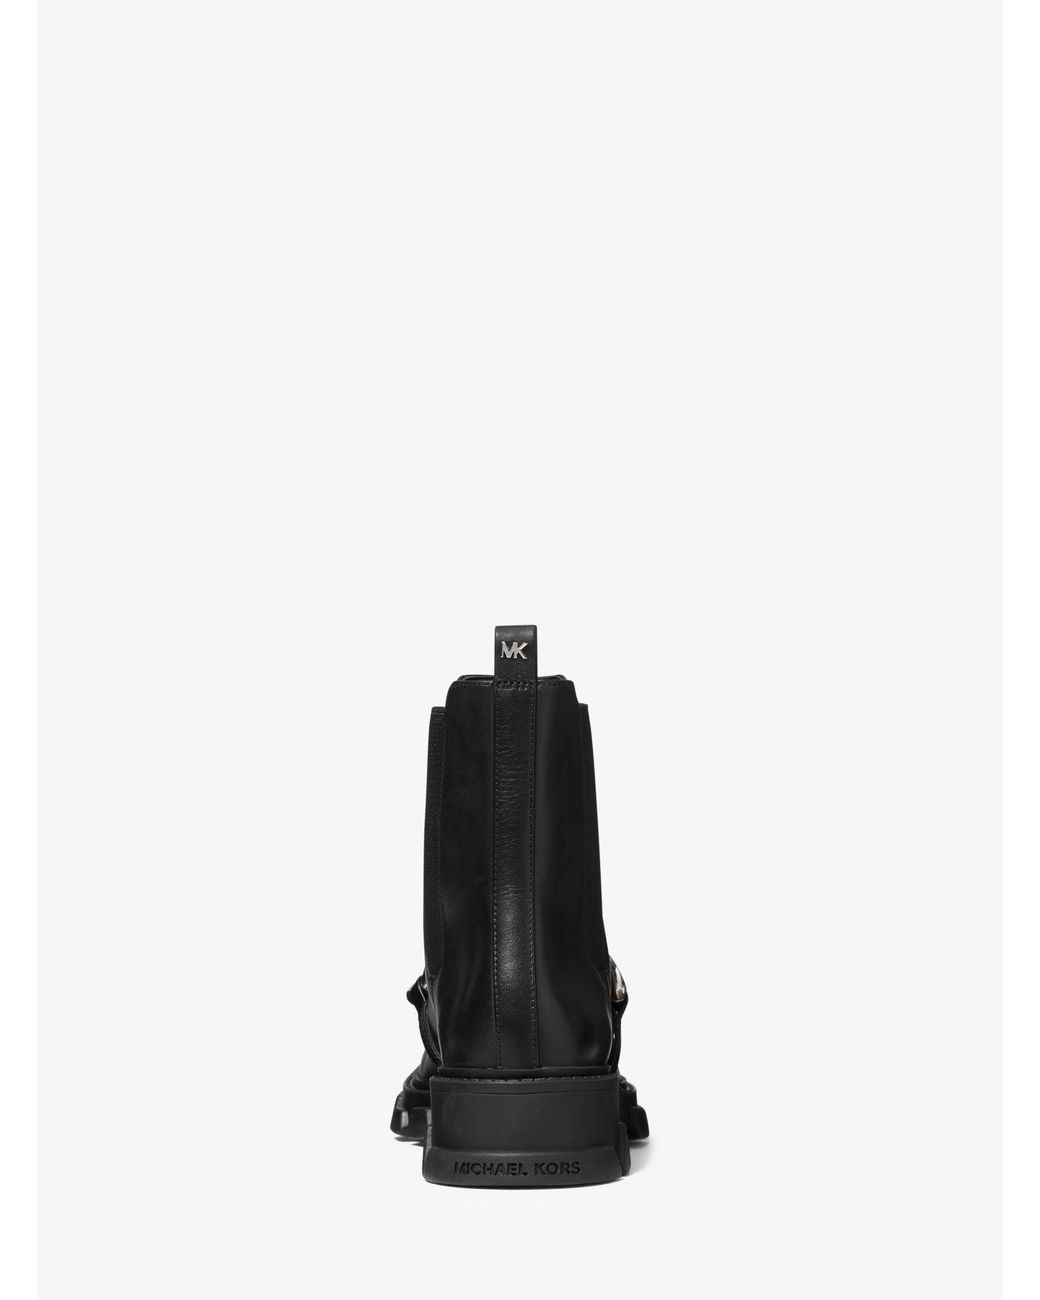 Michael Kors Scarlett Embellished Leather Boot in Black | Lyst